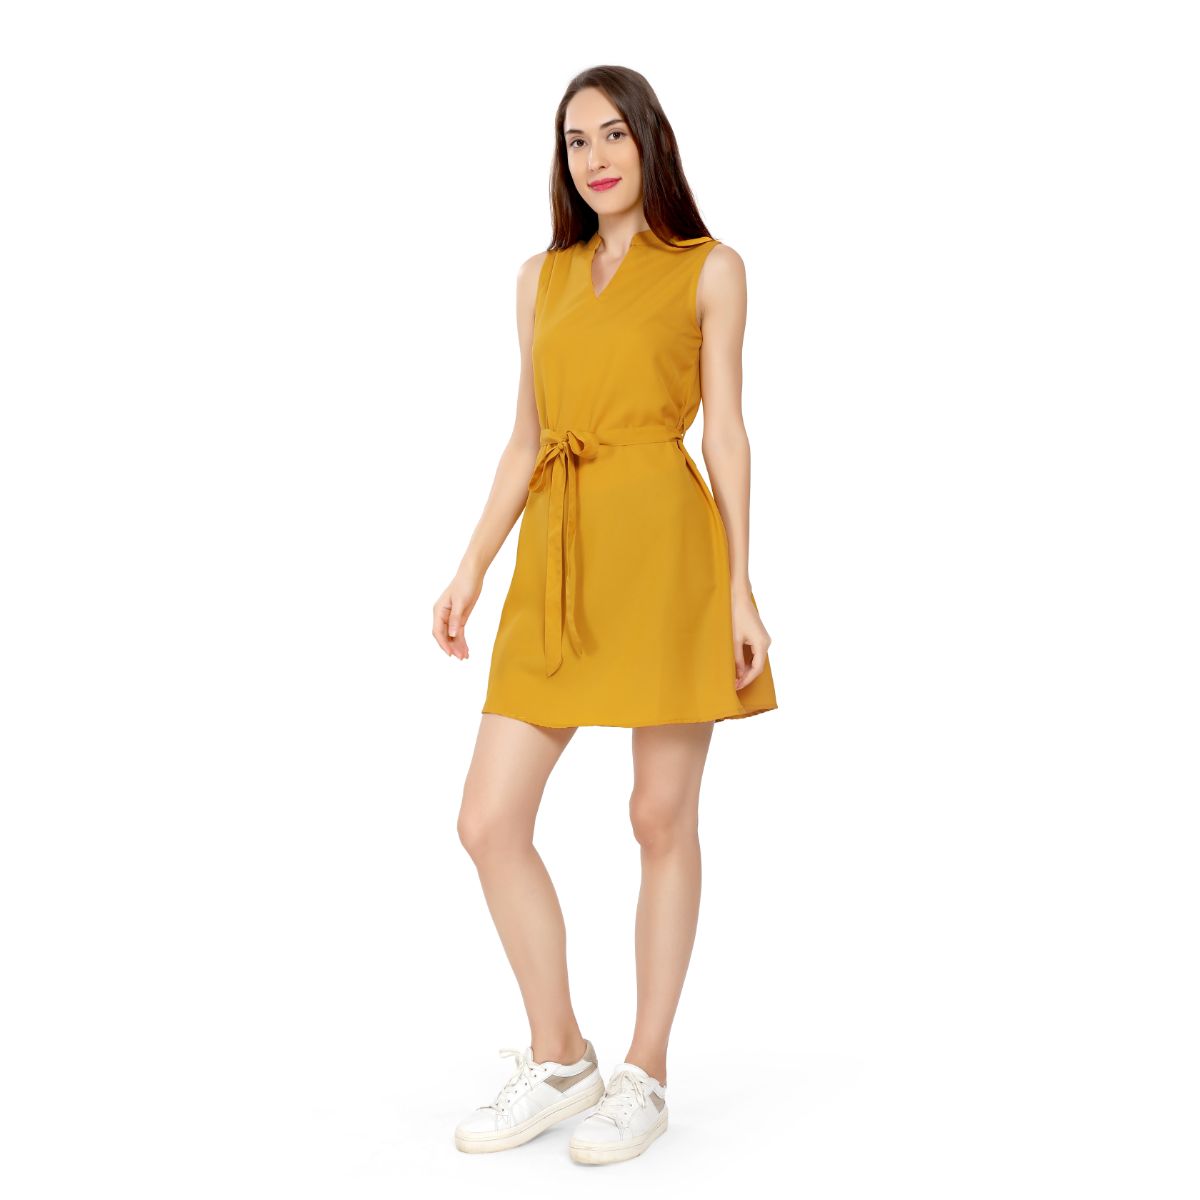 Mantra Mustard moss crepe Classic a-line dress